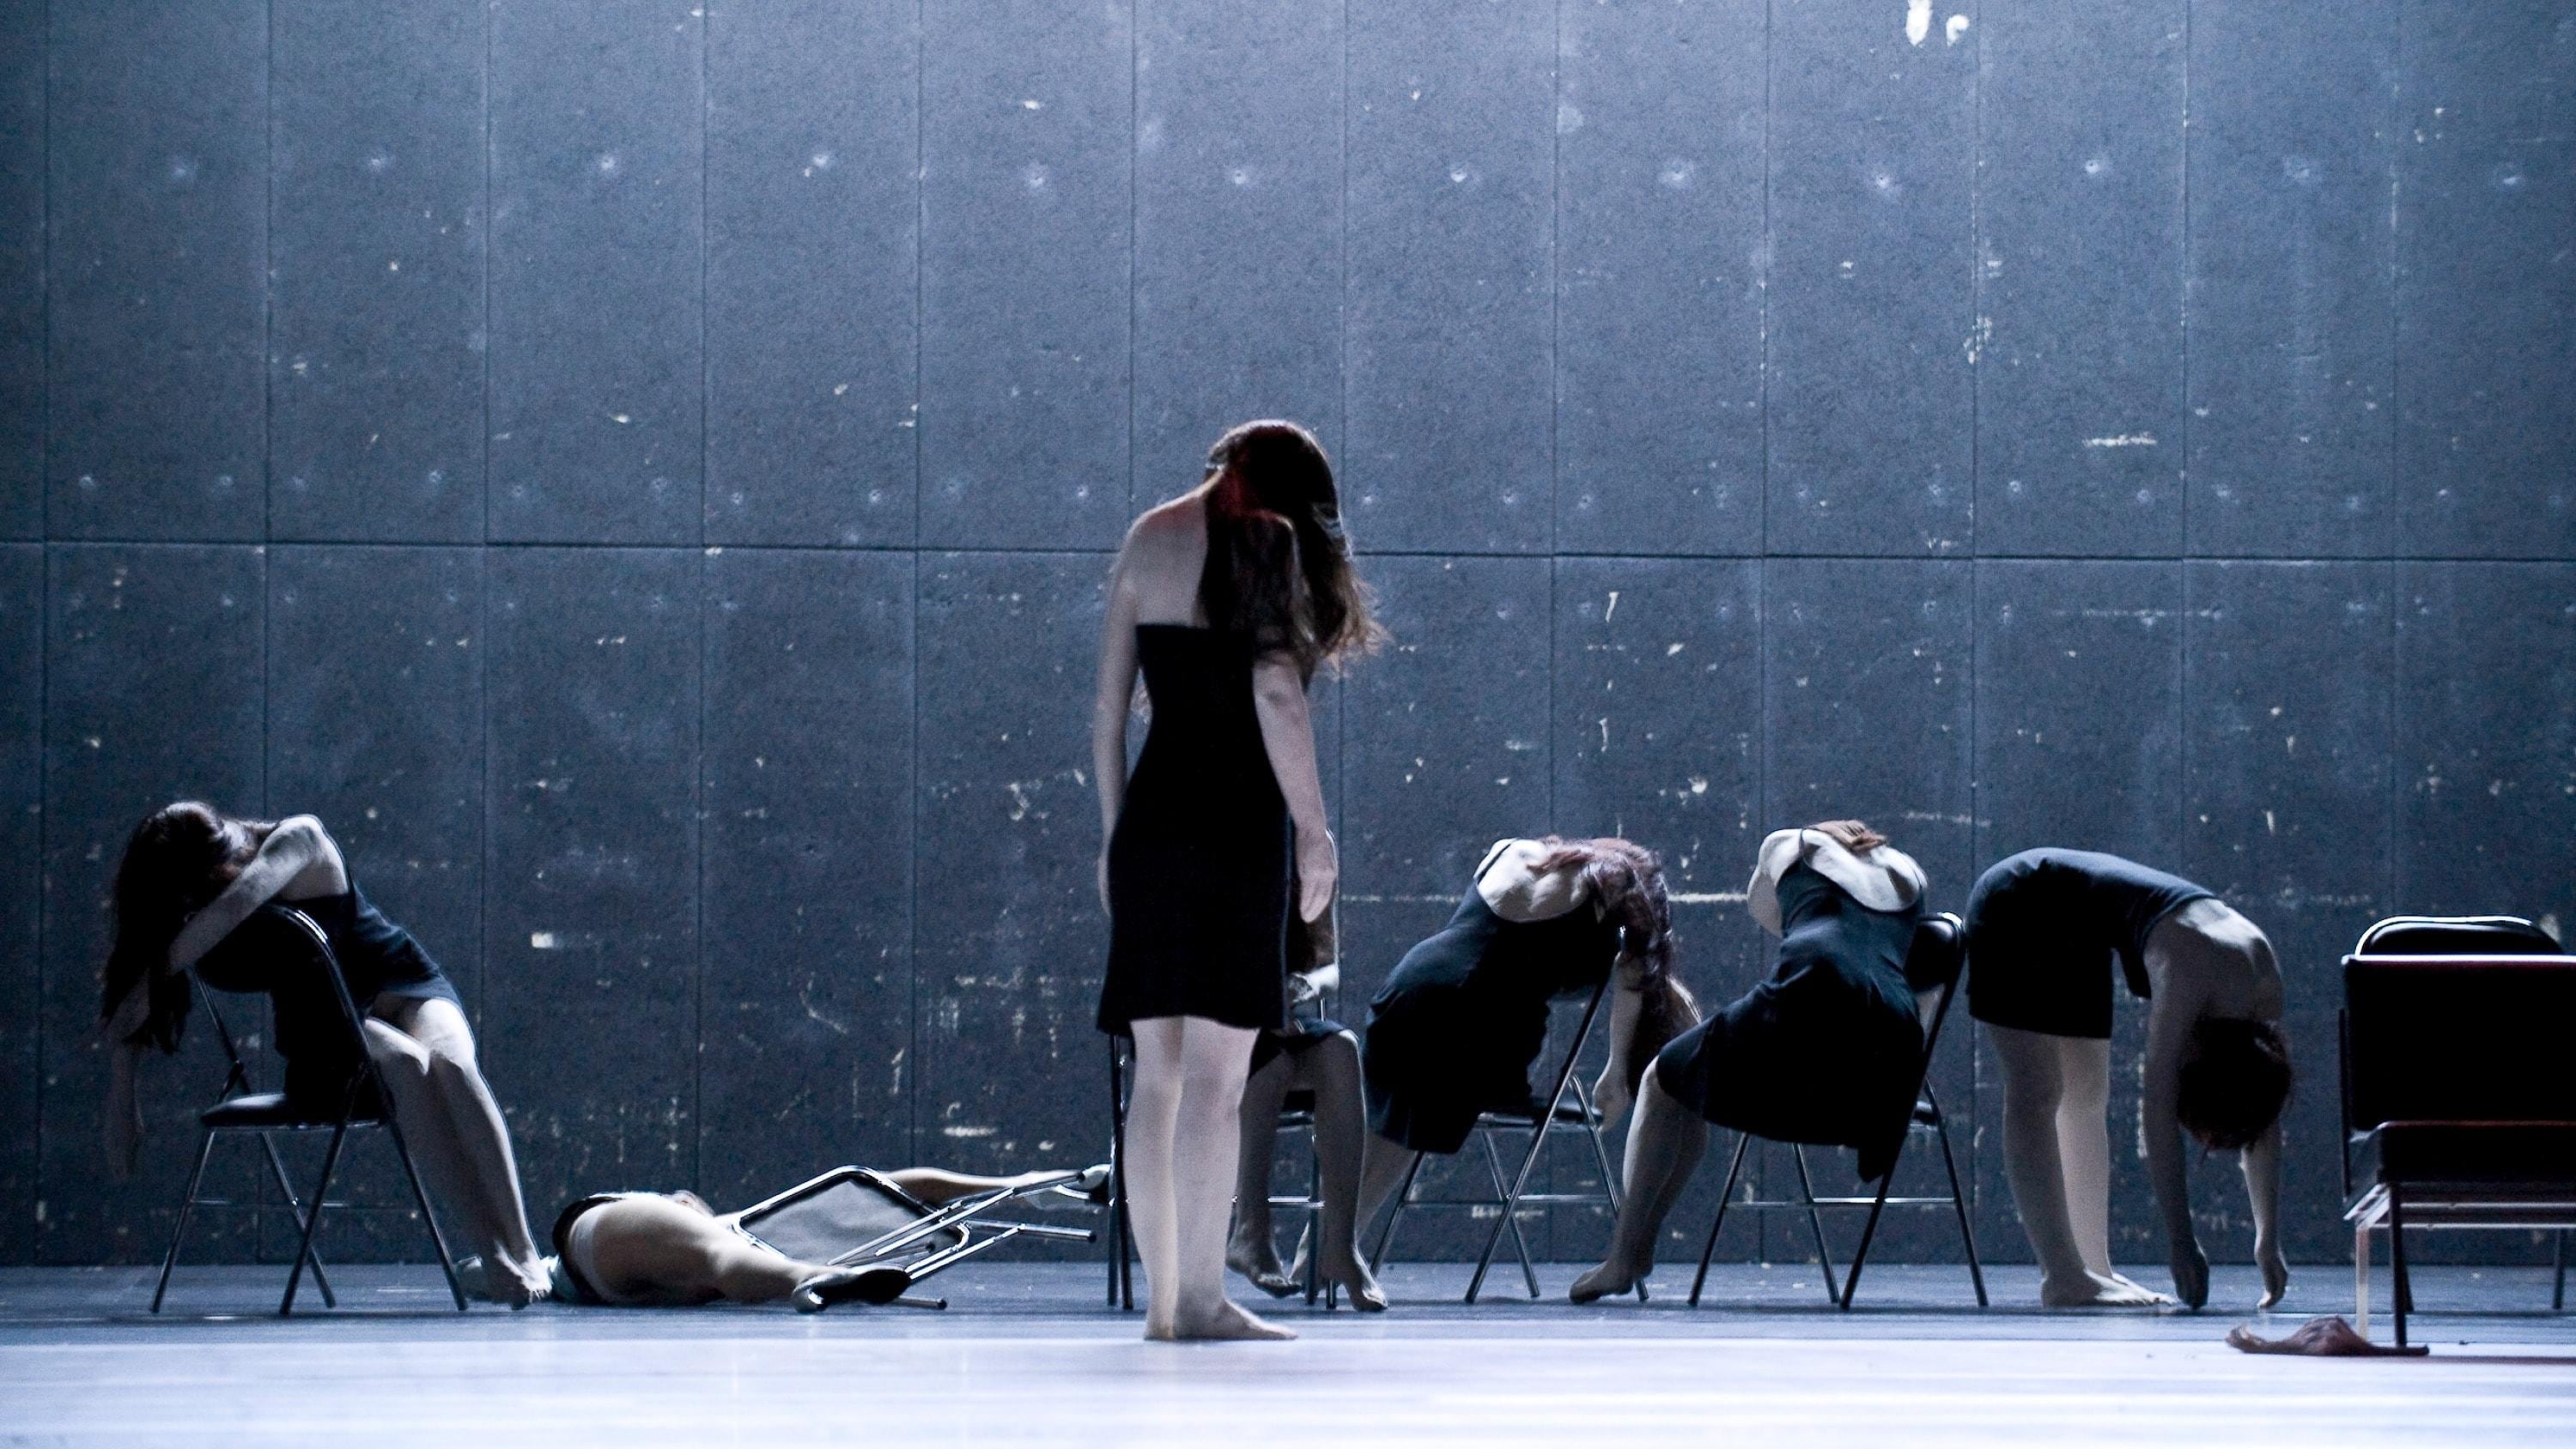 Gisèle Vienne的作品《Showroomdummies》中坐在椅子上的黑衣女子